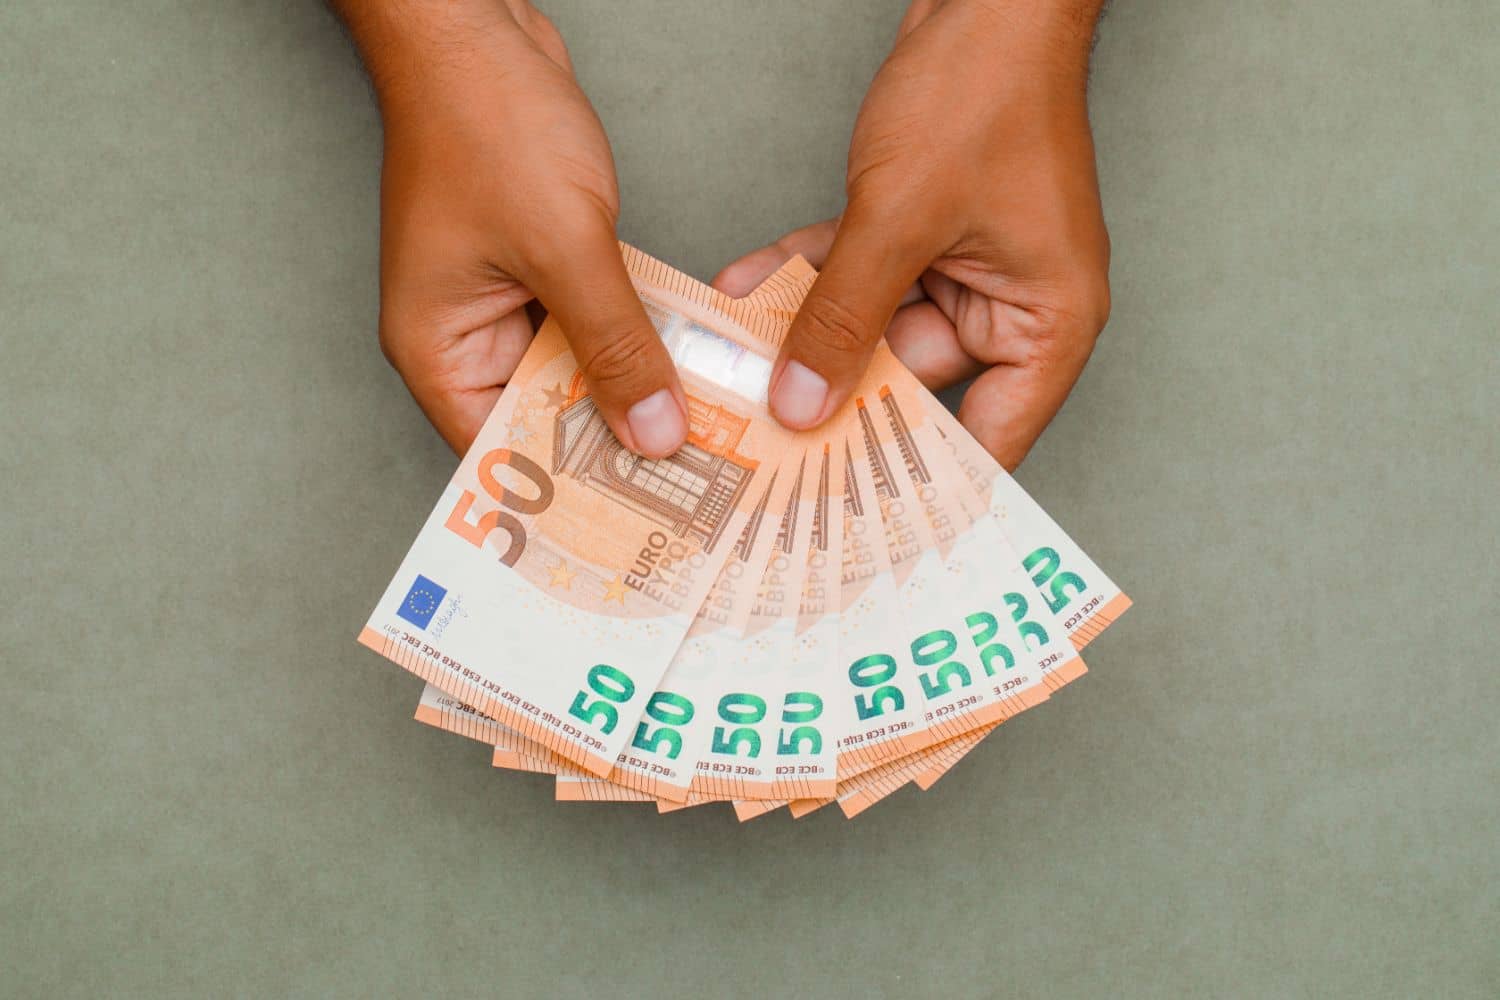 Youth Pass: Πότε θα πληρωθούν οι δικαιούχοι την πληρωμή των 150 ευρώ